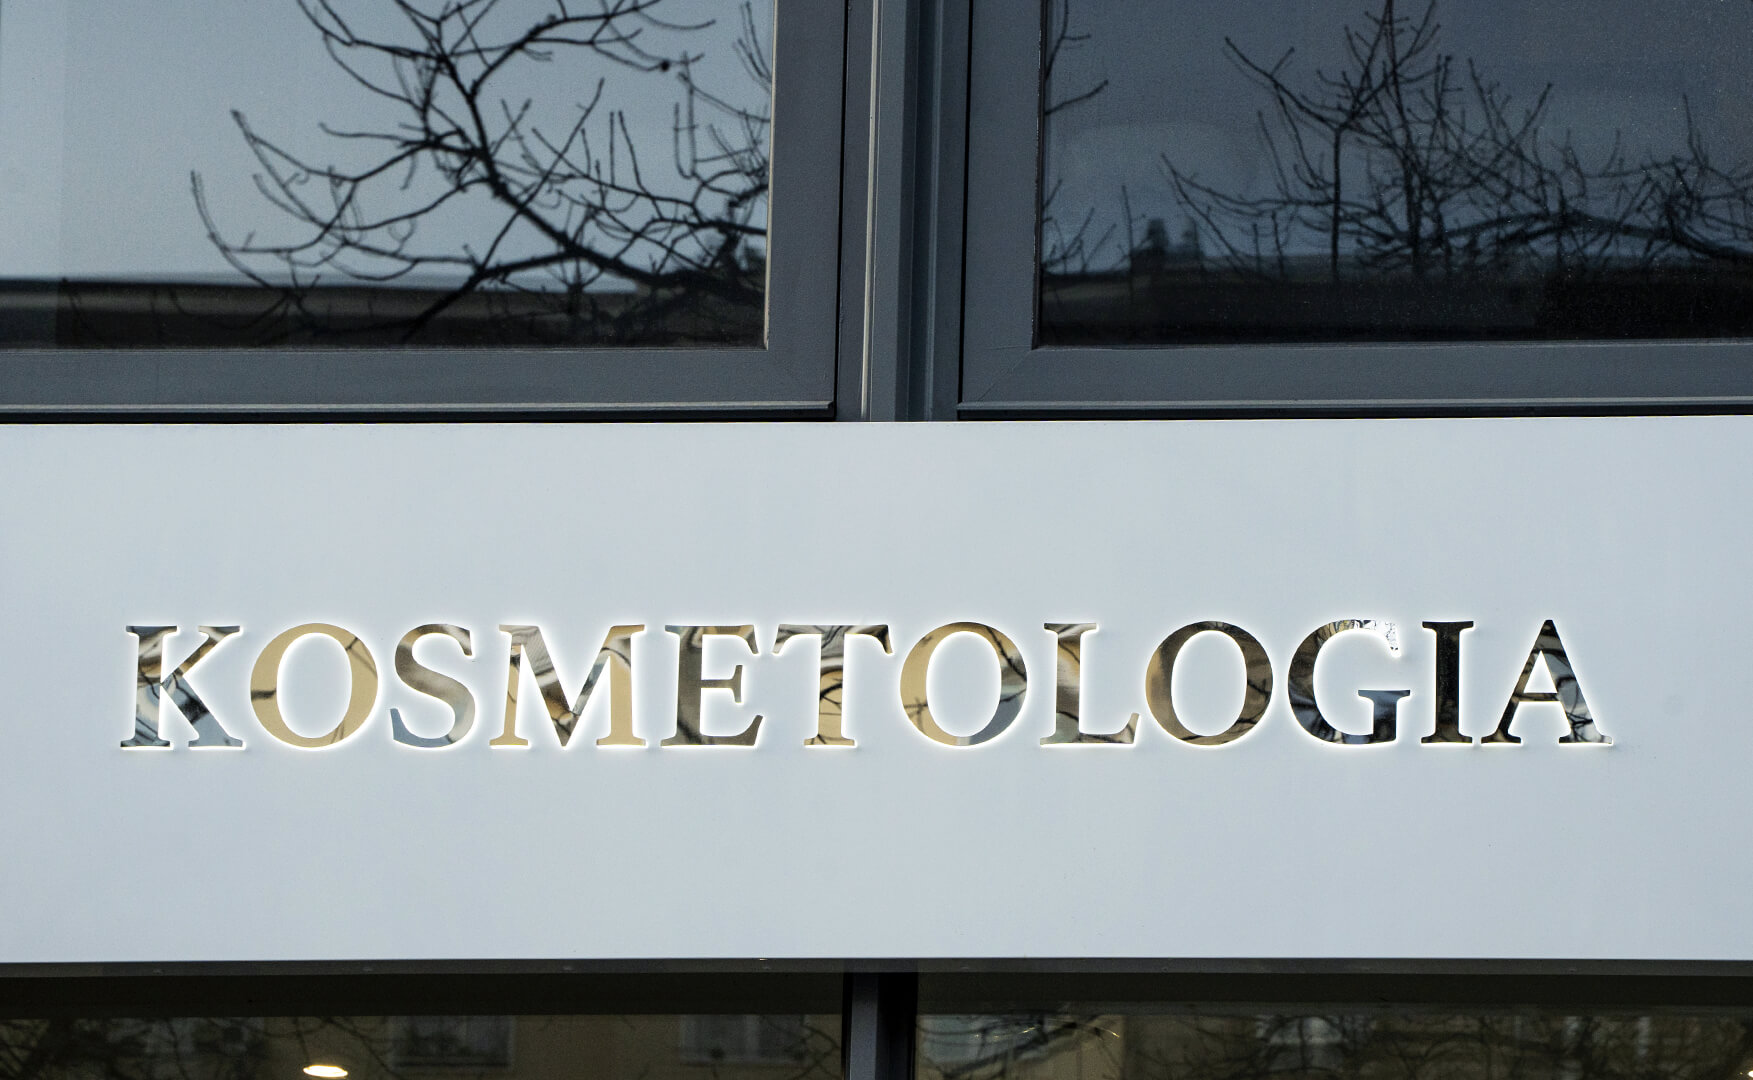 Cosmetology - dibond coffer, illuminated, side-lit letters